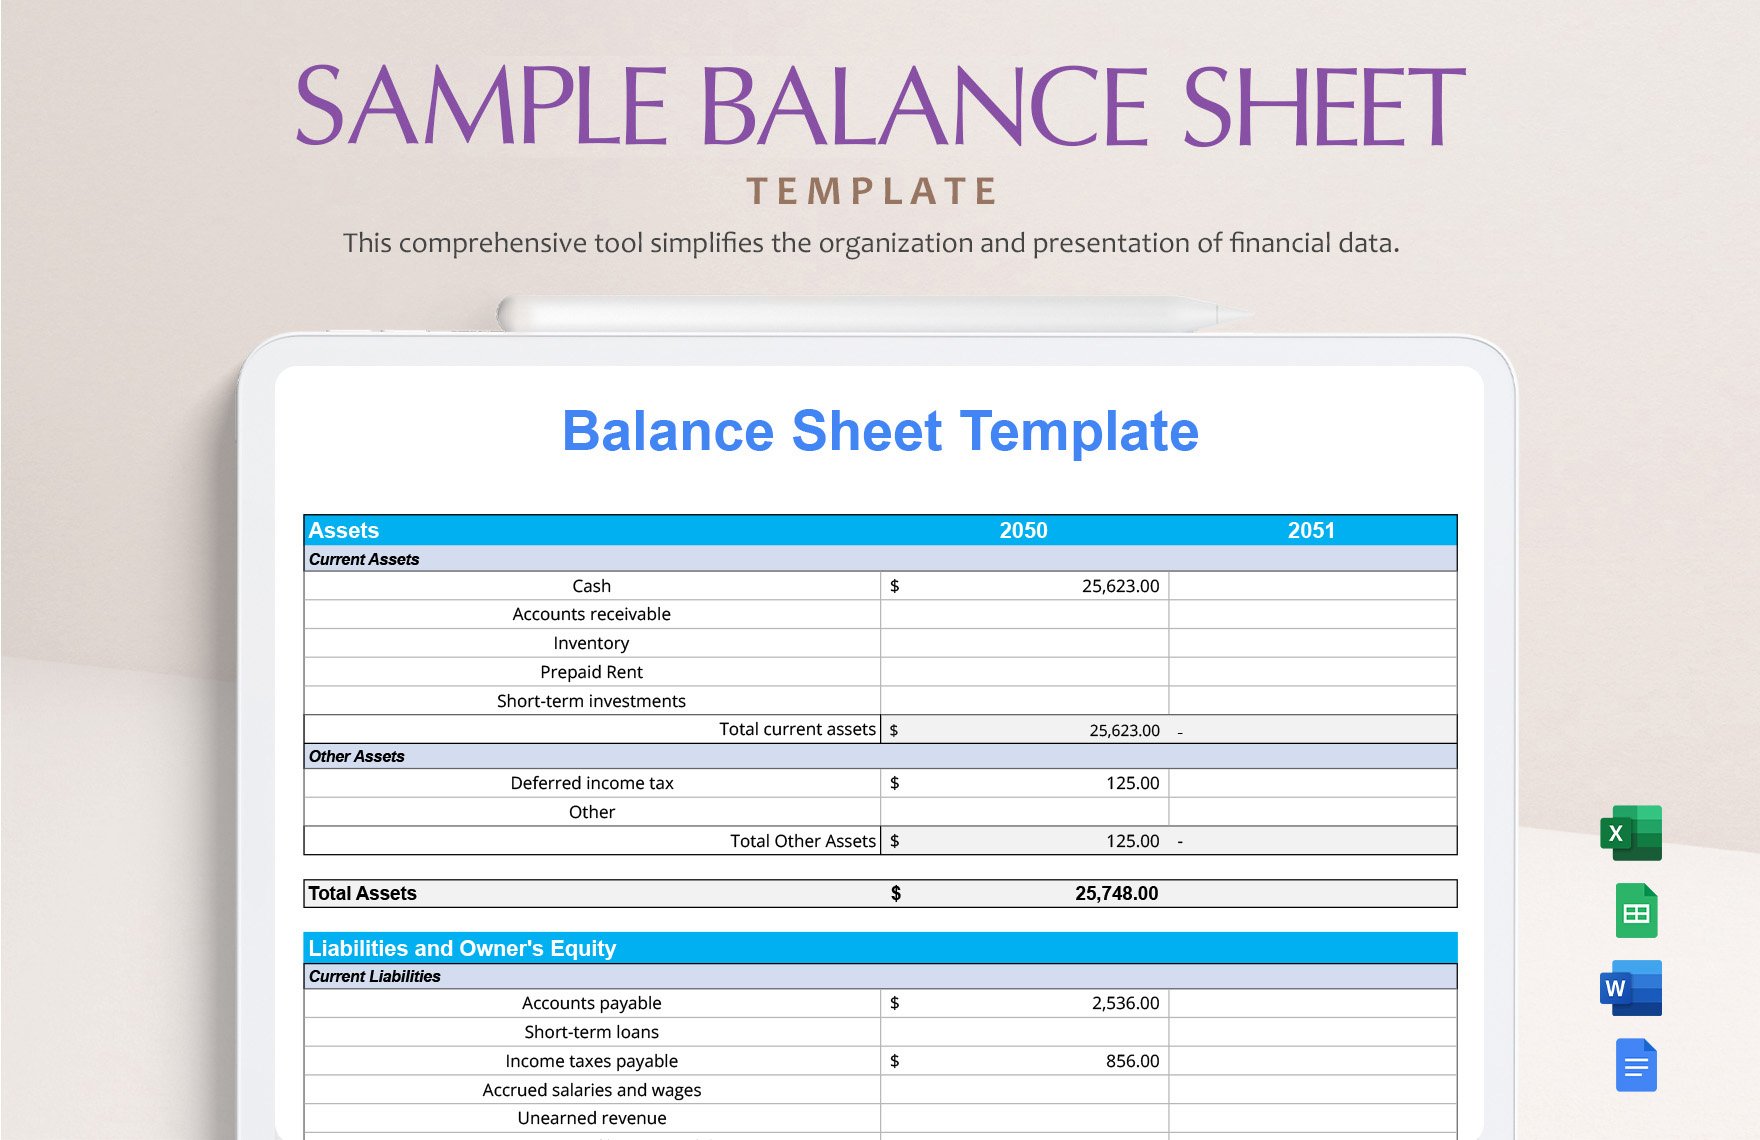 Free Sample Balance Sheet Template in Word, Google Docs, Excel, Google Sheets